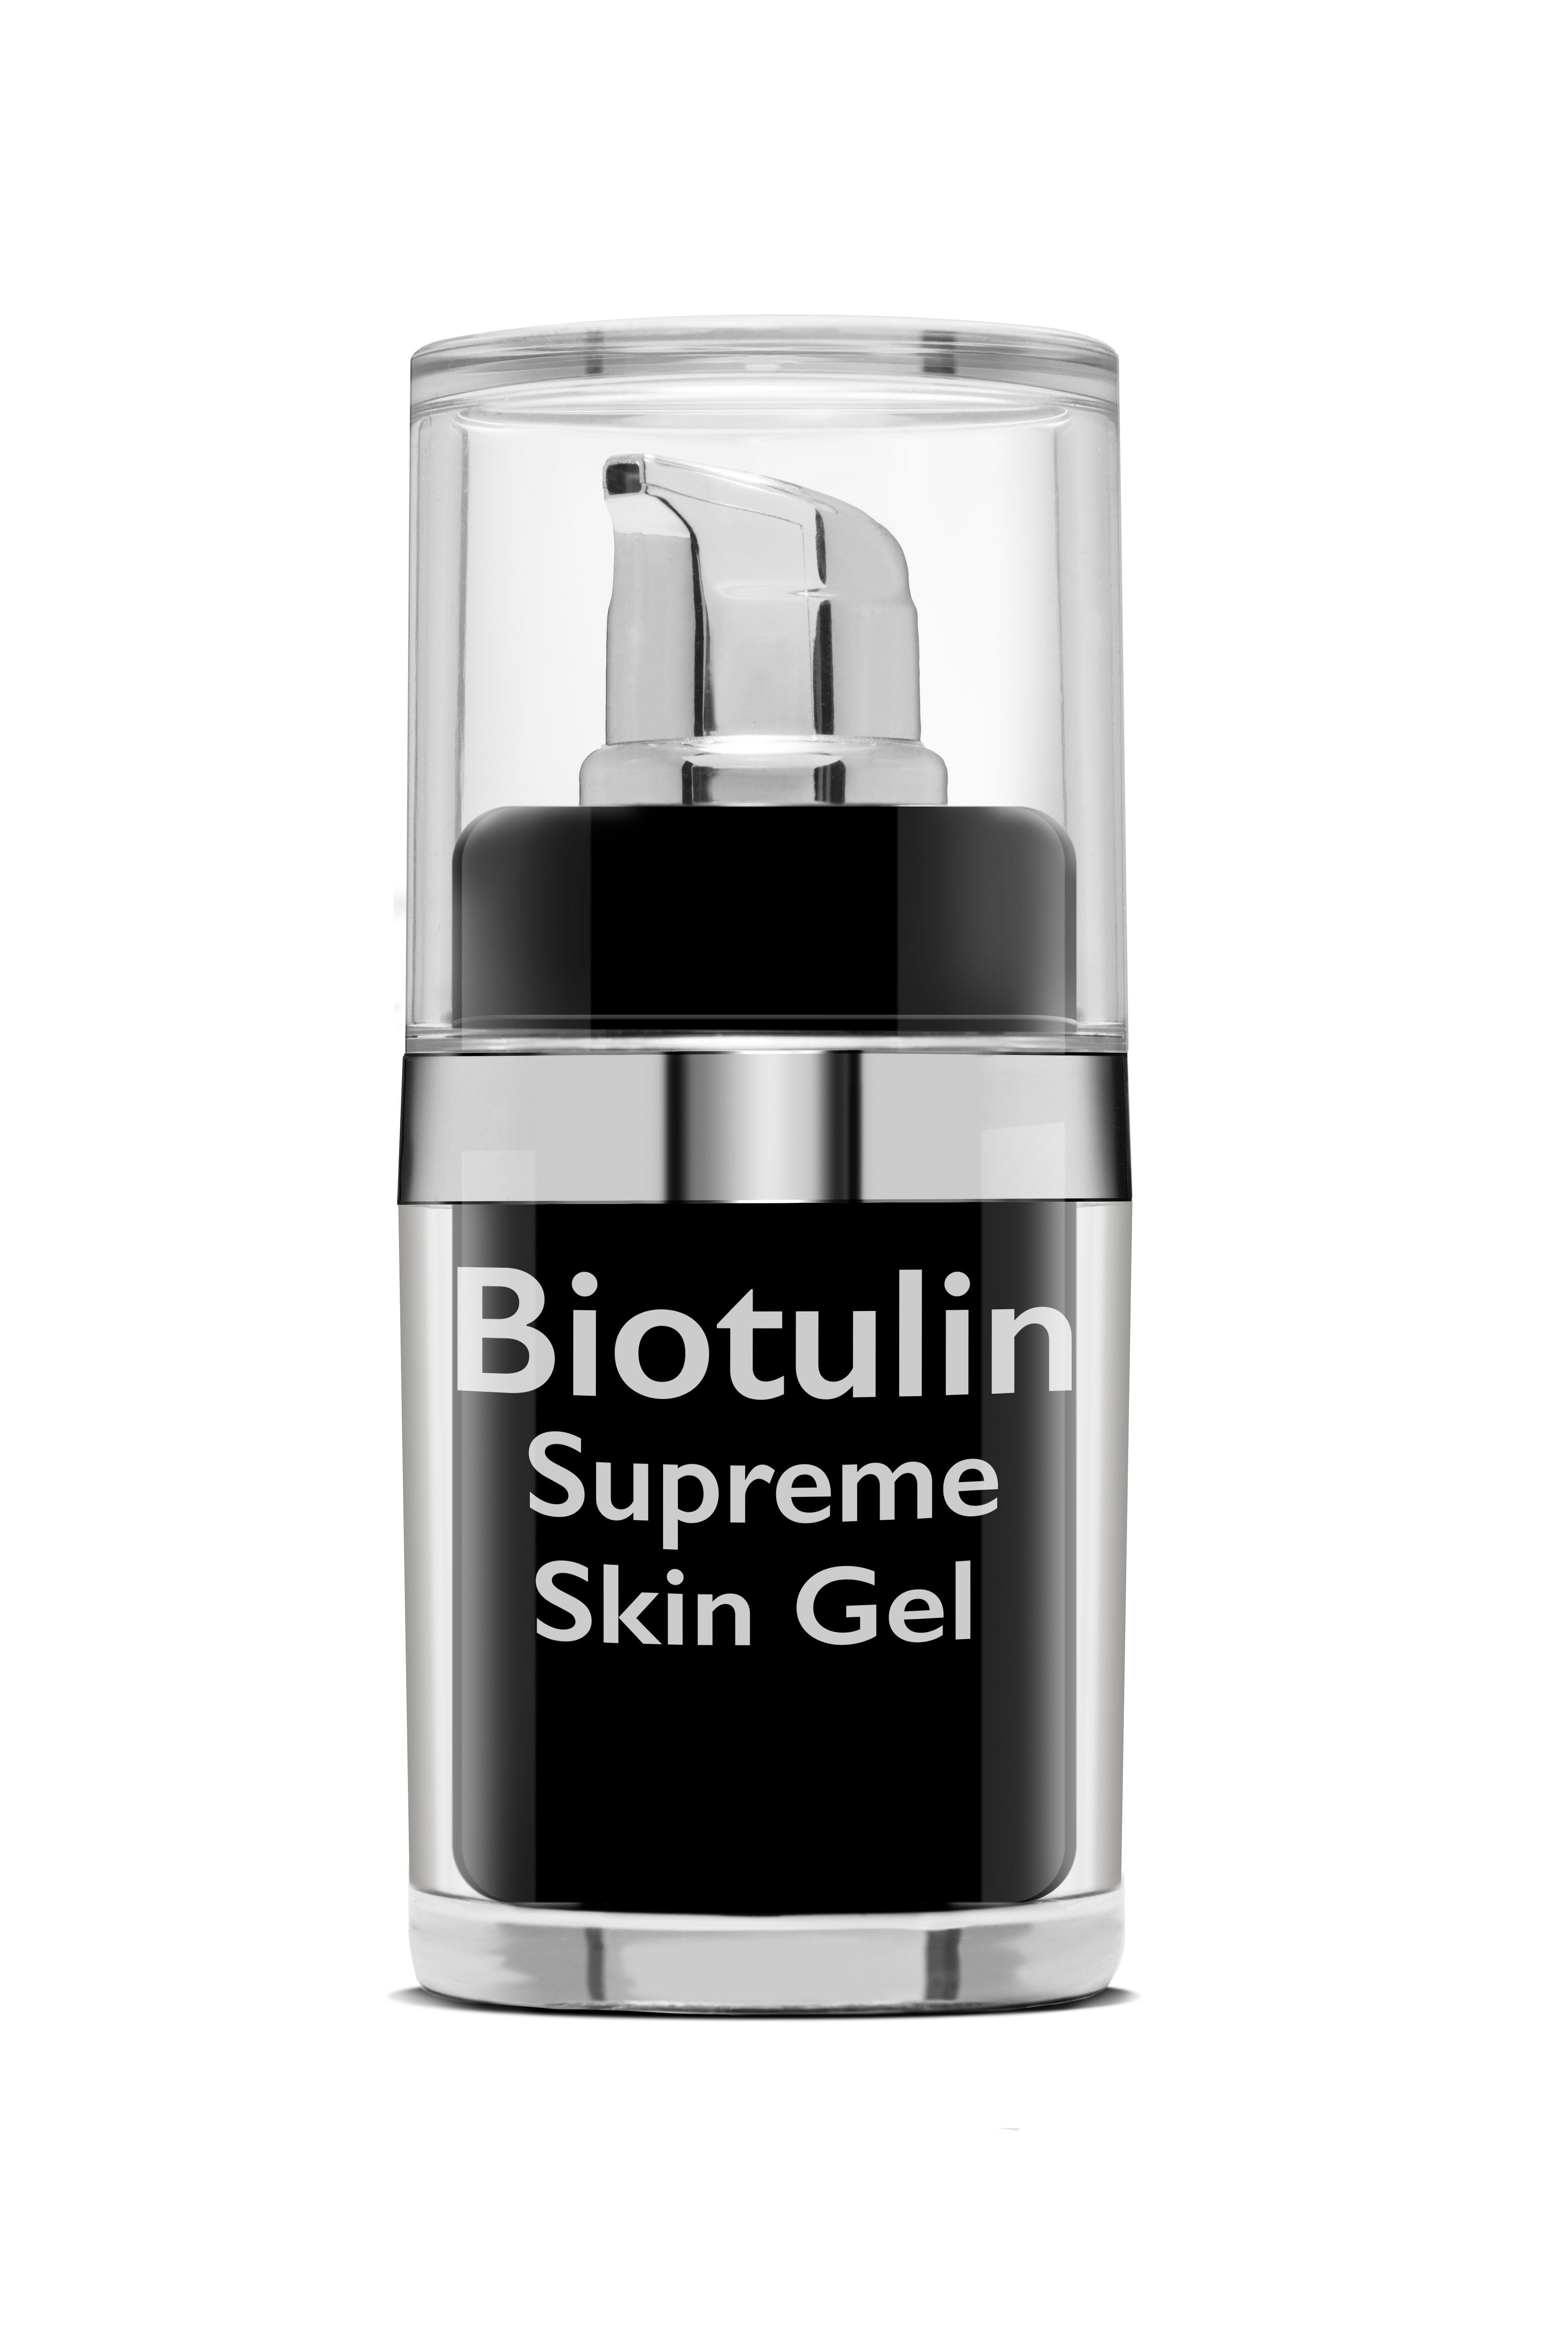 Image of Biotulin Supreme Skin Gel - 15ml